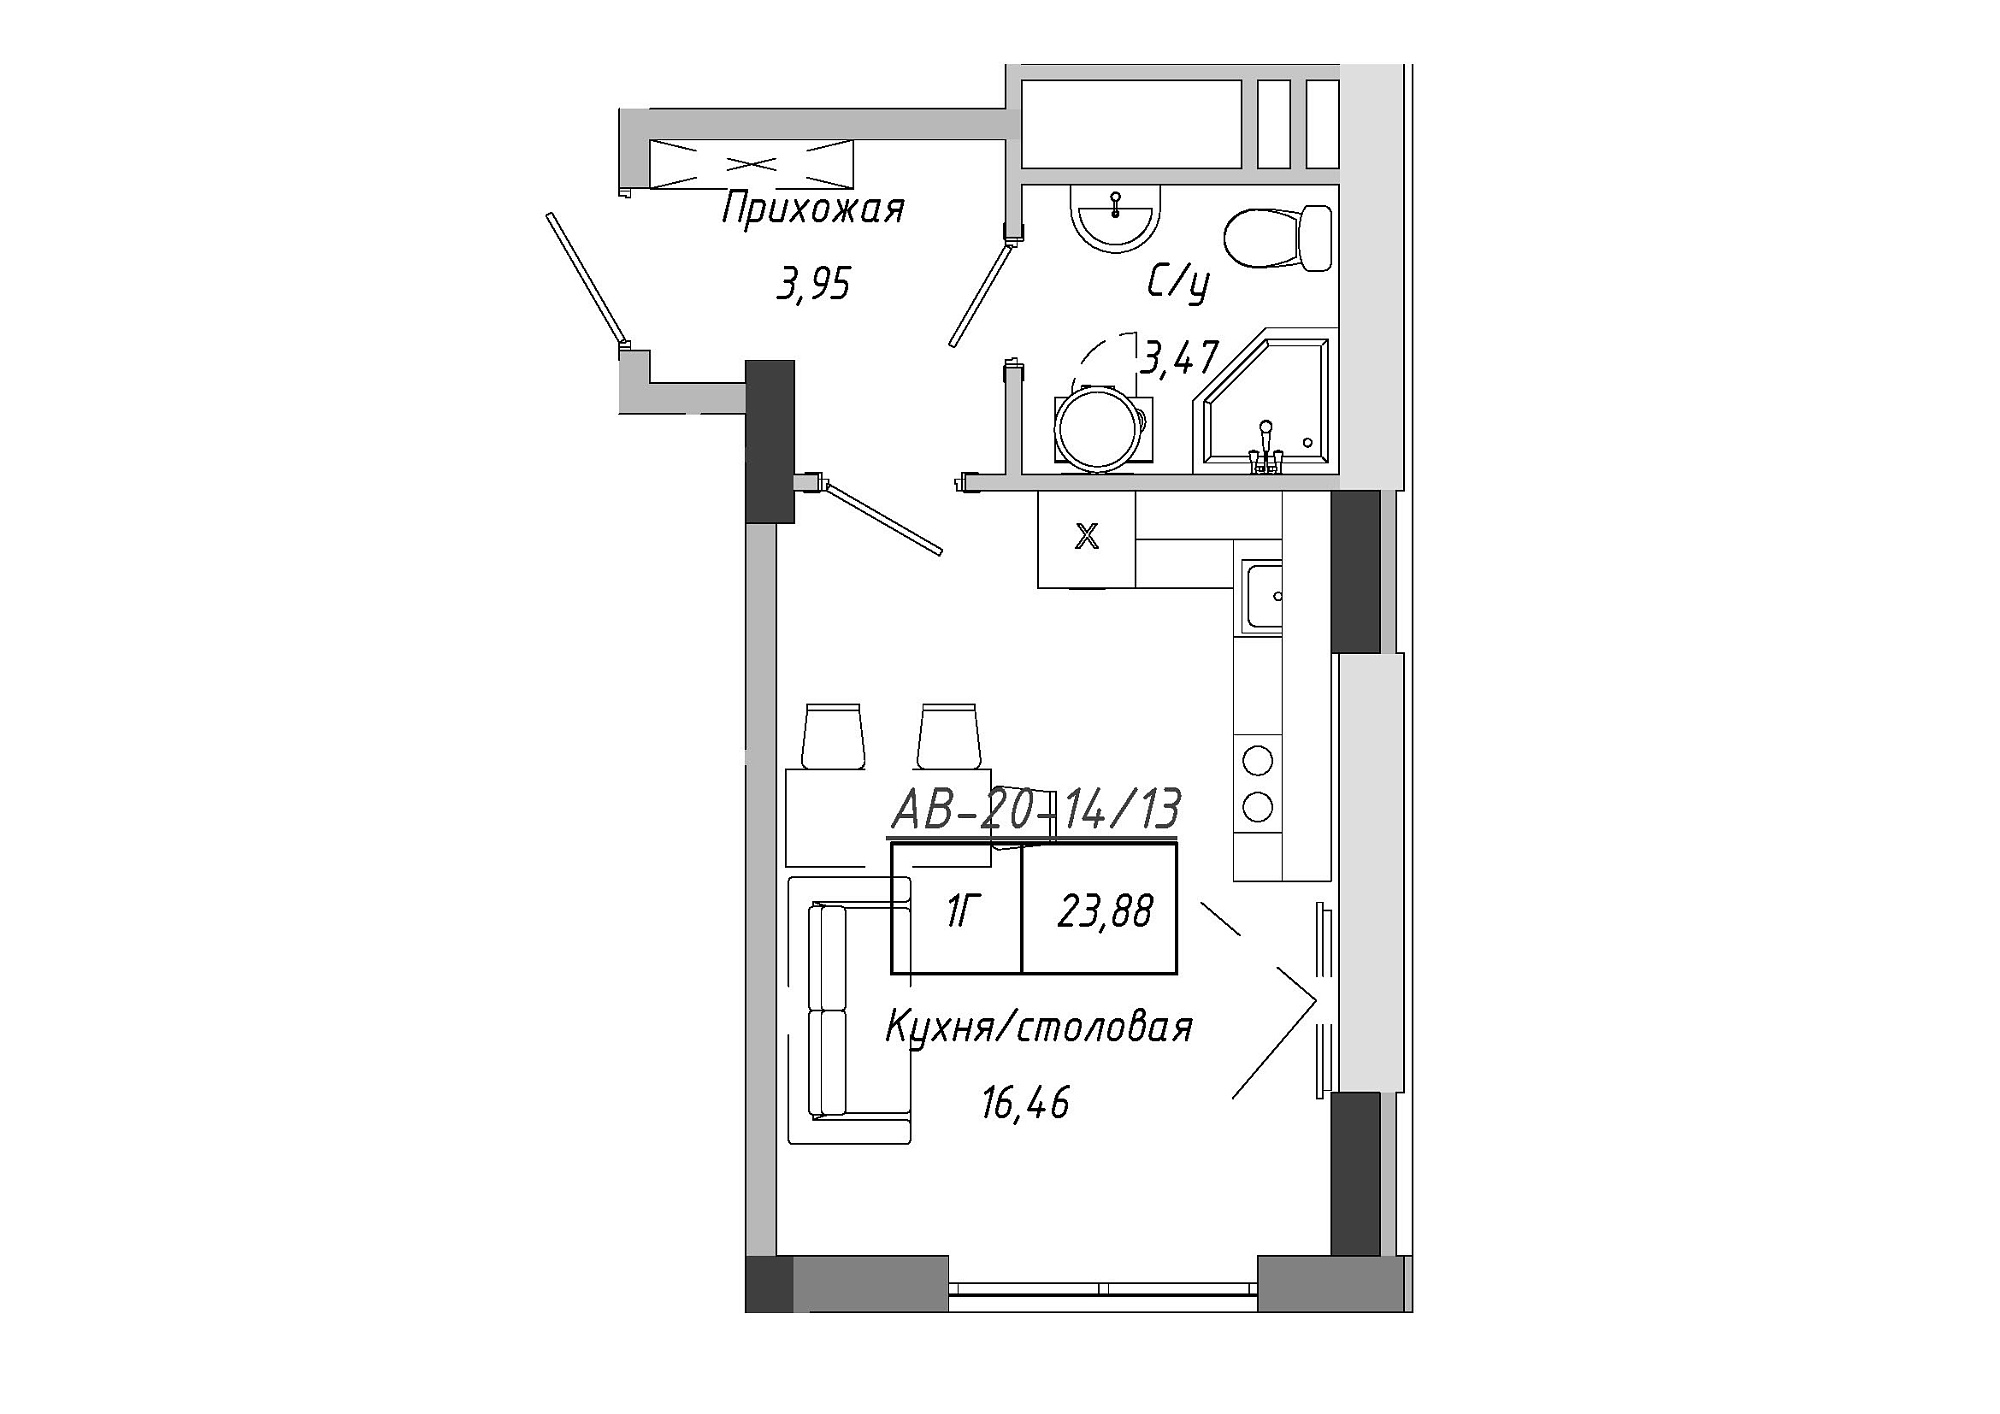 Planning Smart flats area 23.88m2, AB-20-14/00113.